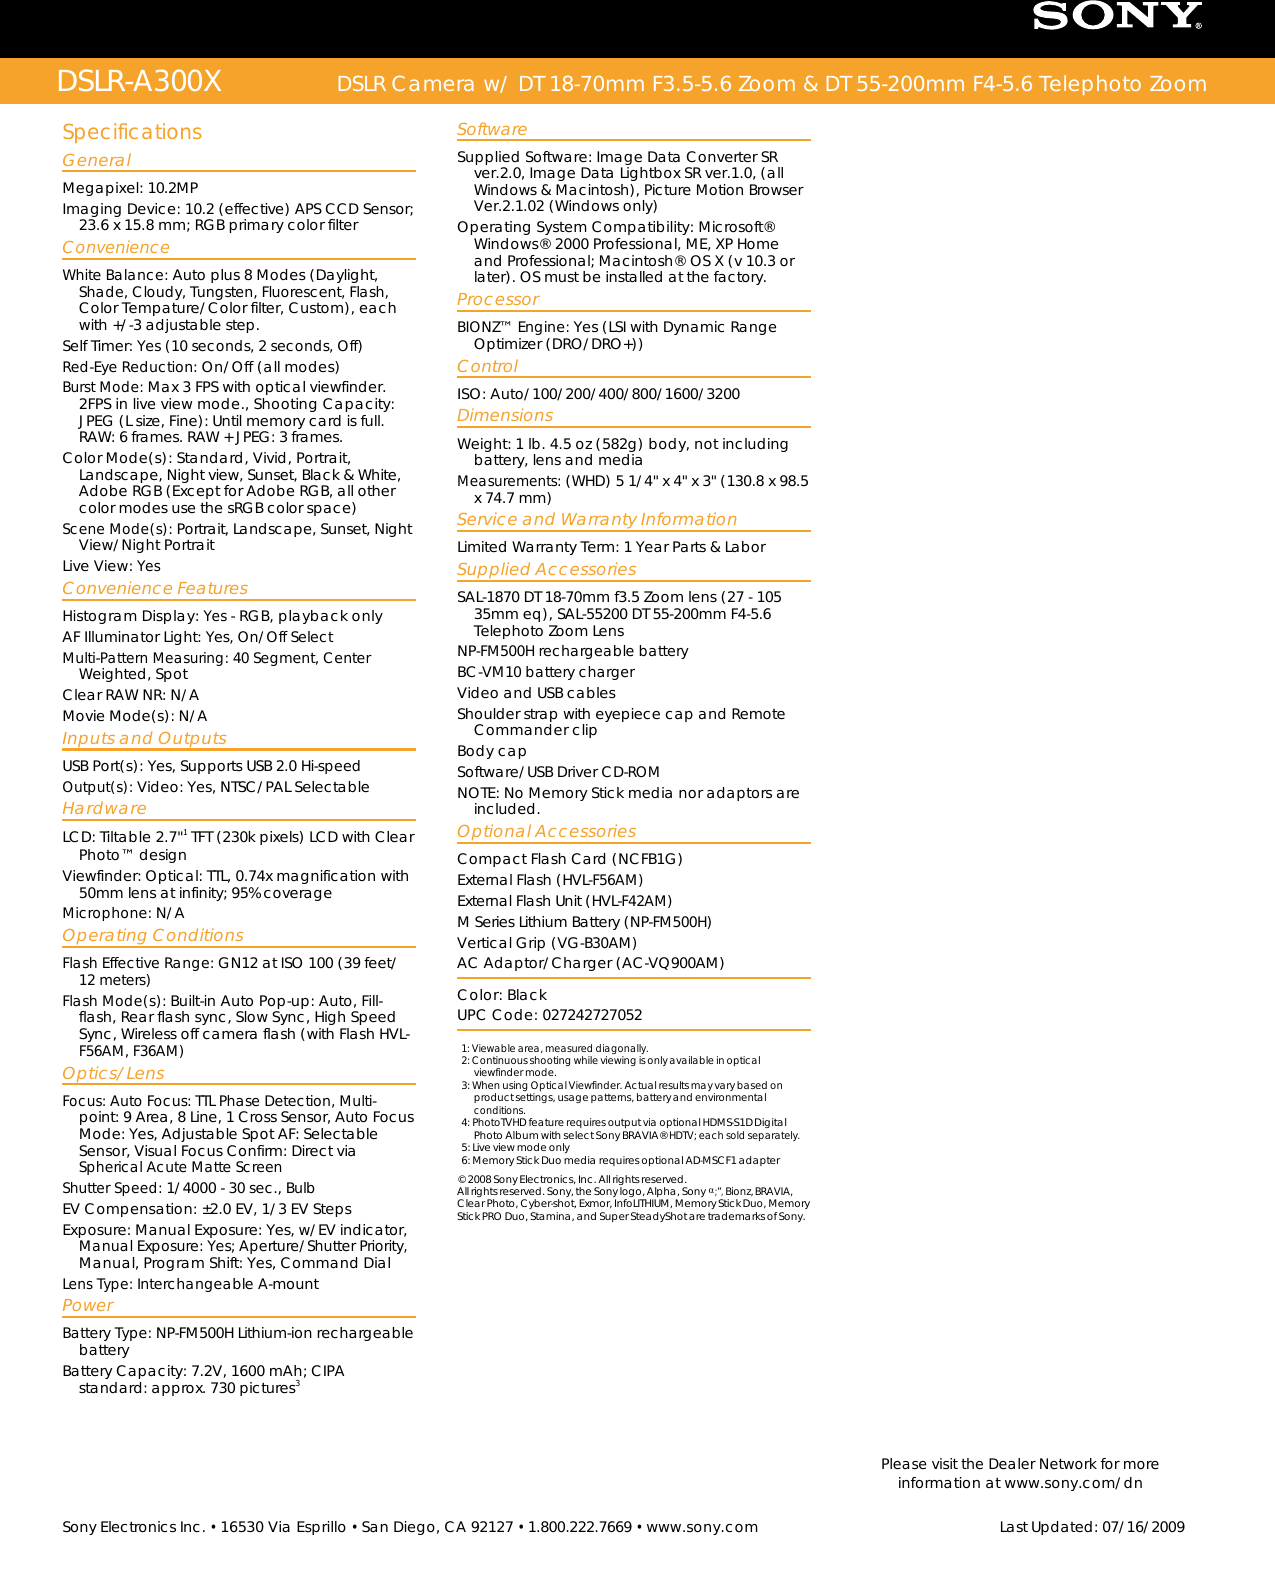 Page 2 of 2 - Sony DSLR-A300 User Manual Marketing Specifications (DSLR-A300X) (Black ) DSLRA300X Mksp